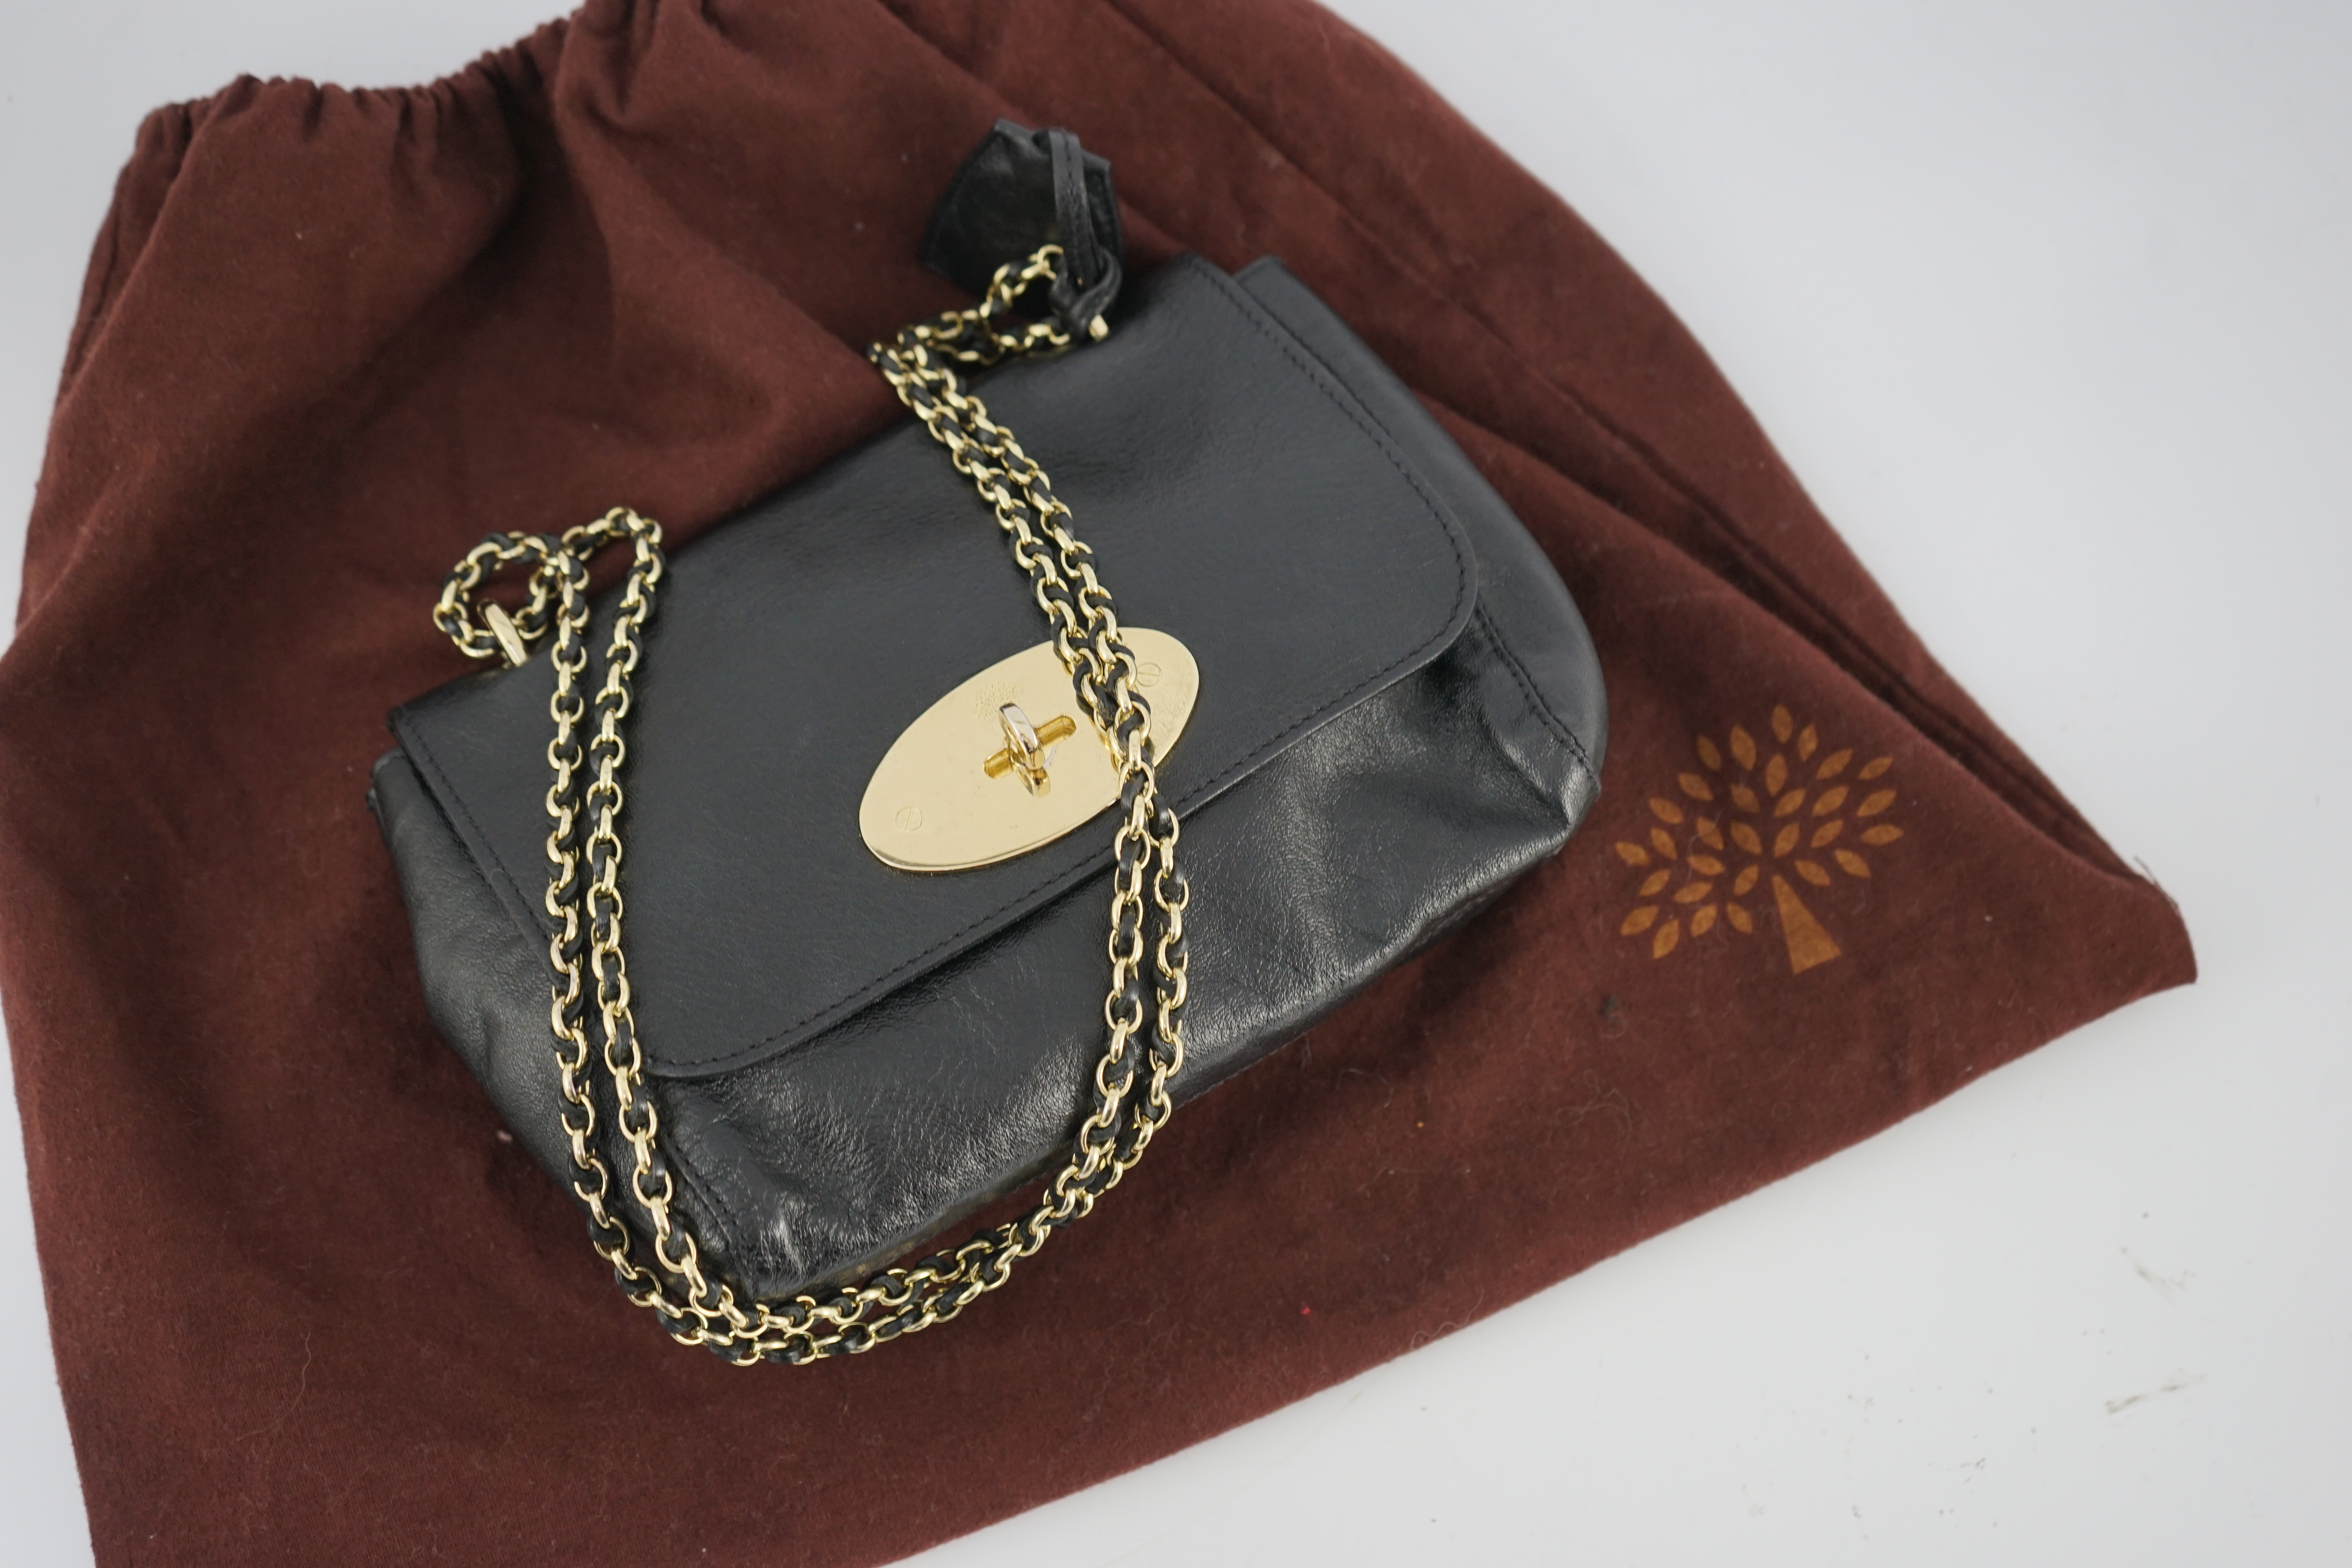 A Mulberry small Lily black leather handbag width 20cm, depth 6cm, height 14cm